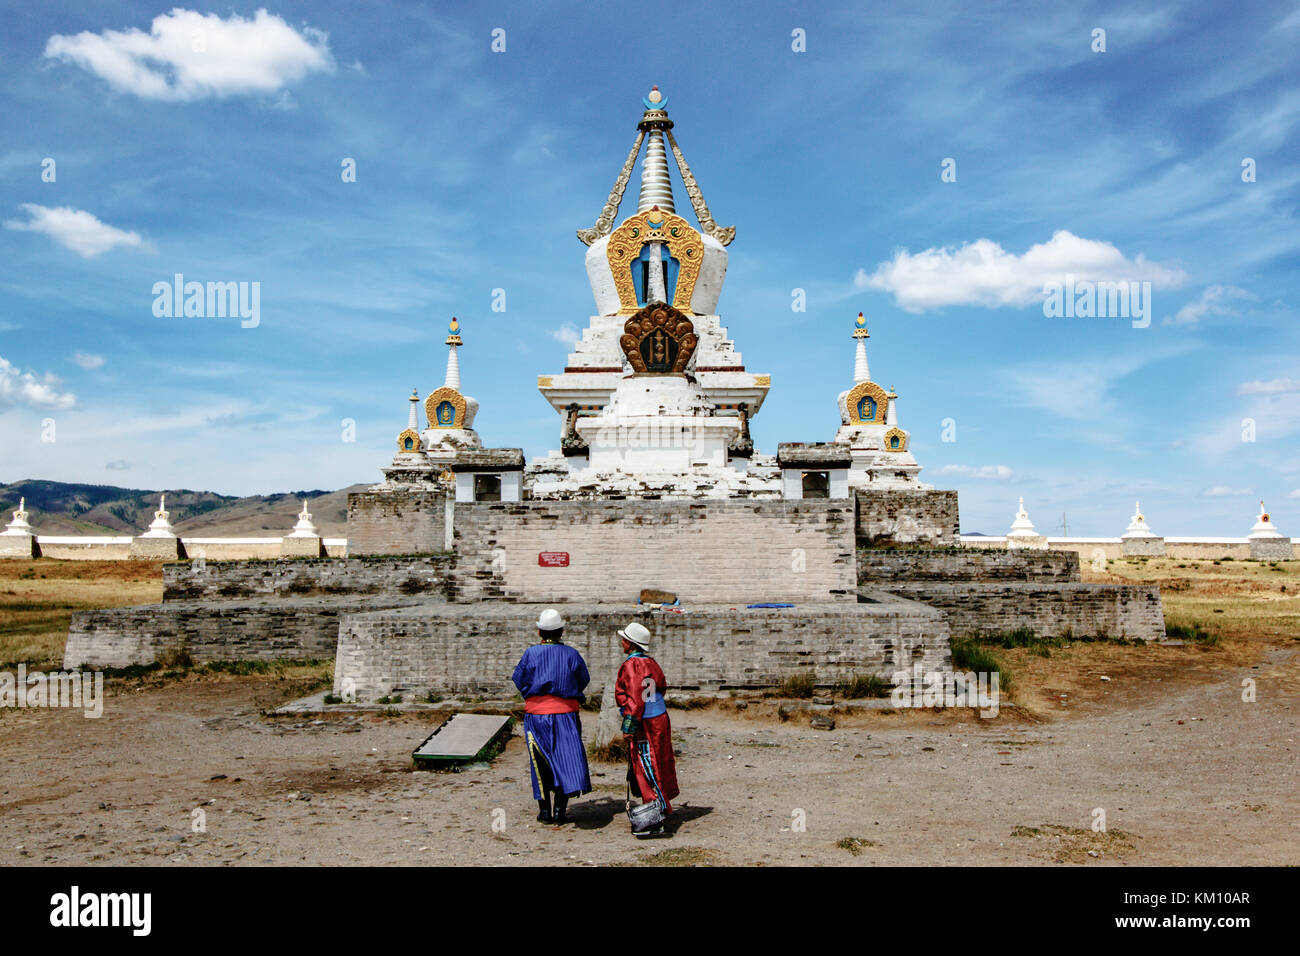 Monastery temple in Karakorum, capital of the mongolian empire Stock Photo